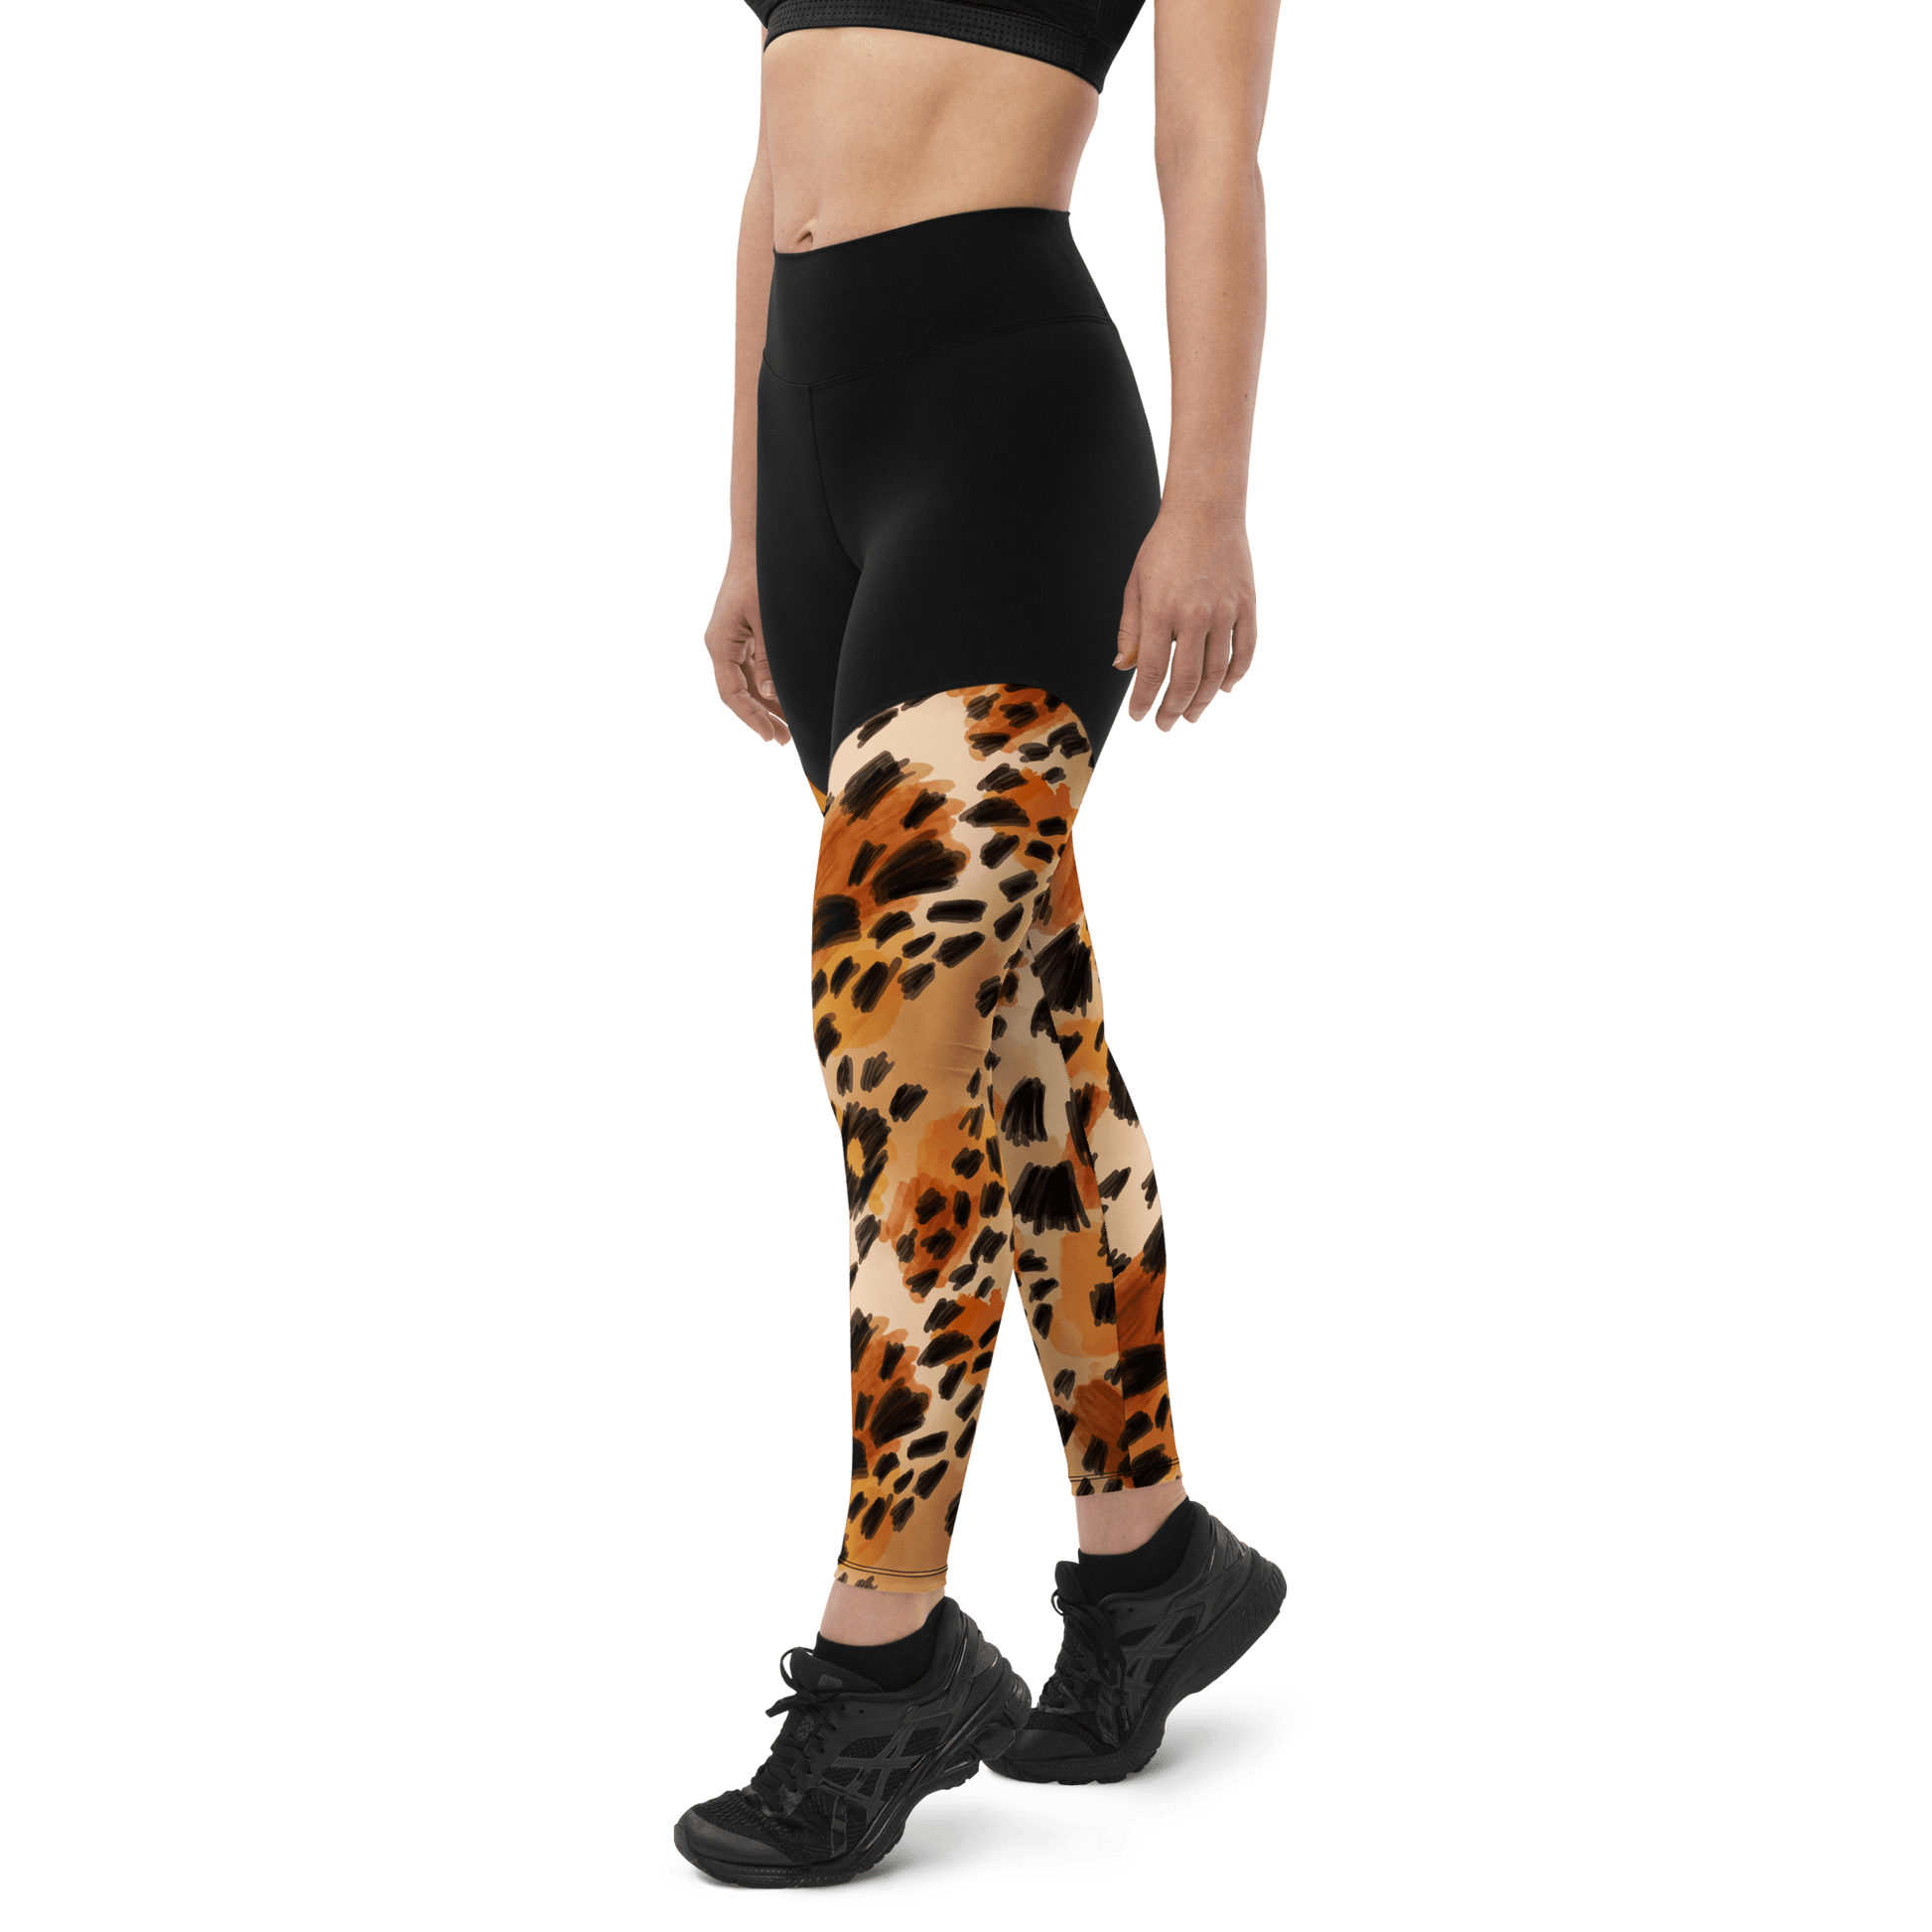 Sahara Desert Tigard Hybrid - Compression Sports Leggings - Sports Leggings - GYMLEGGS LLC